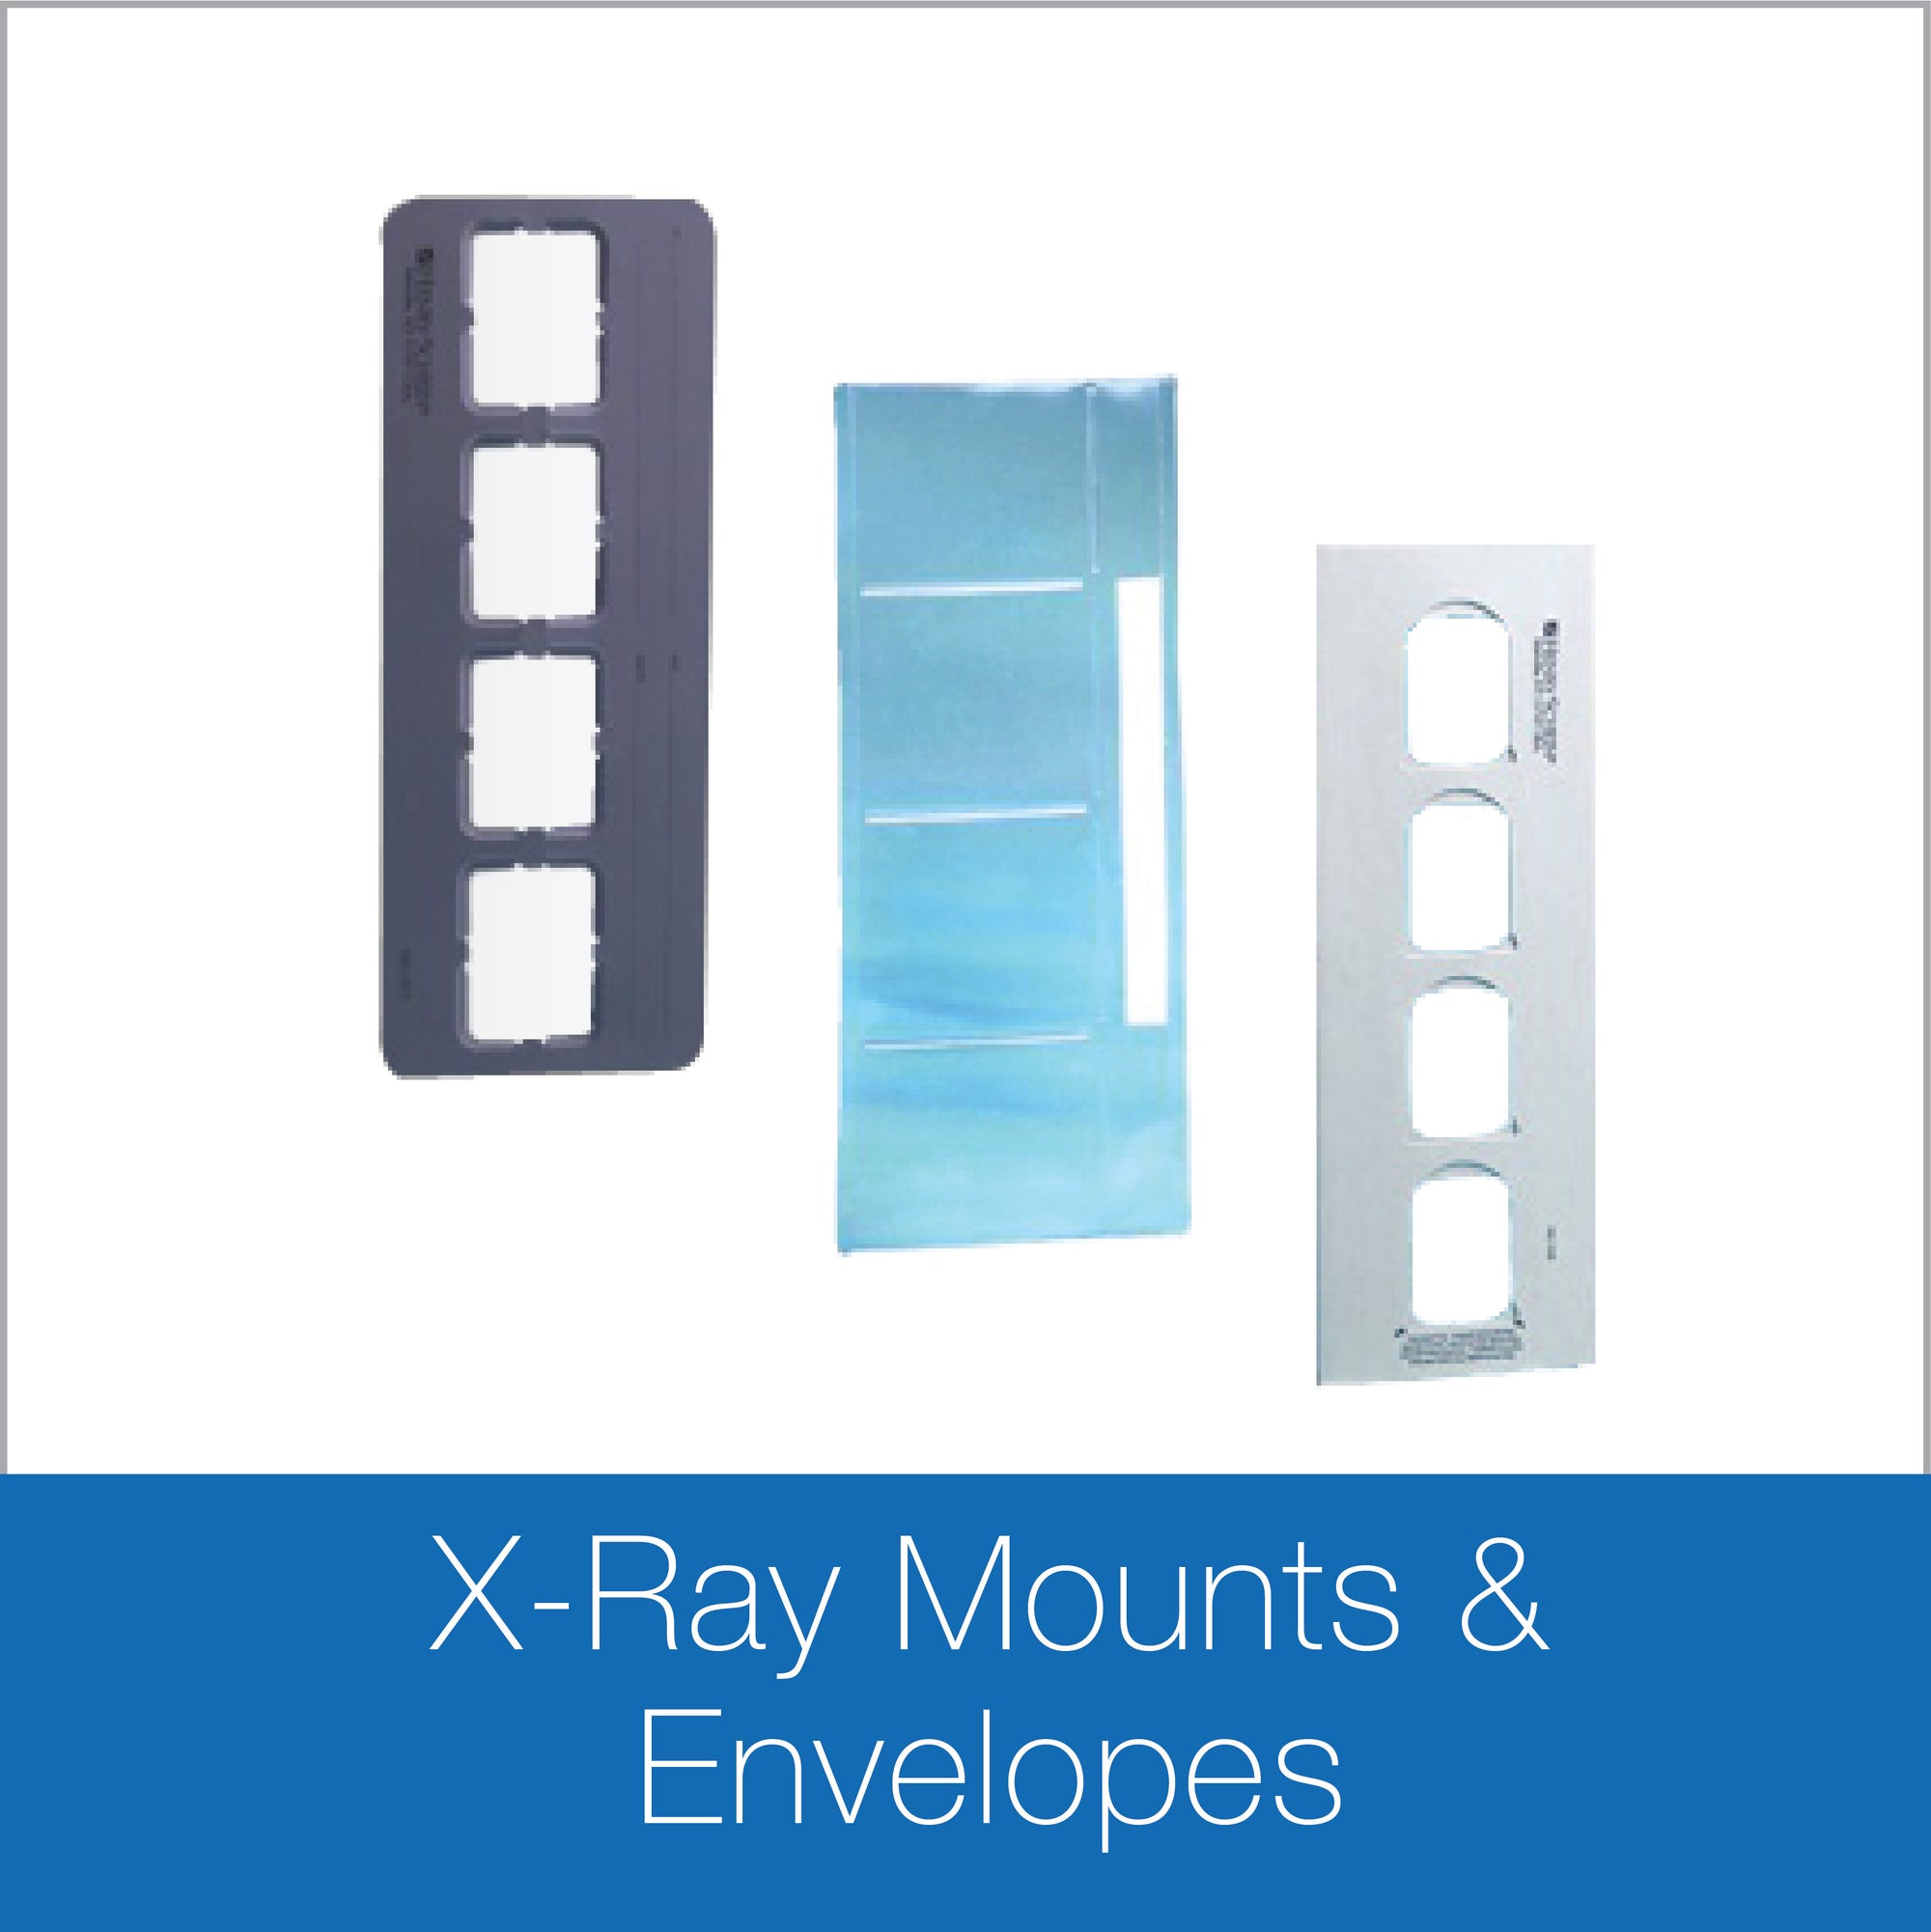 X-Ray Mounts & Envelopes